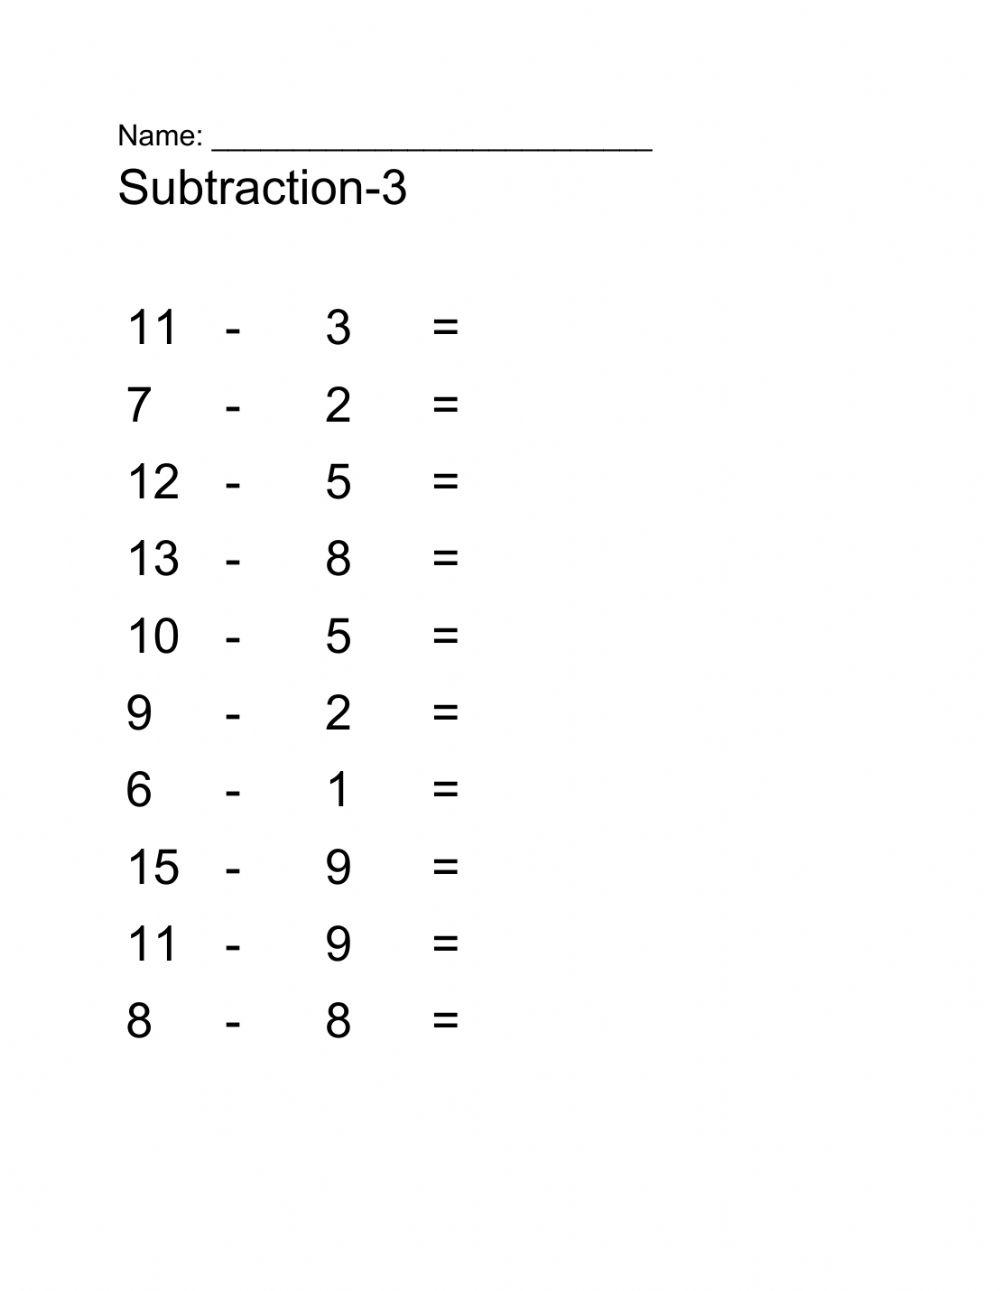 Subtraction-3